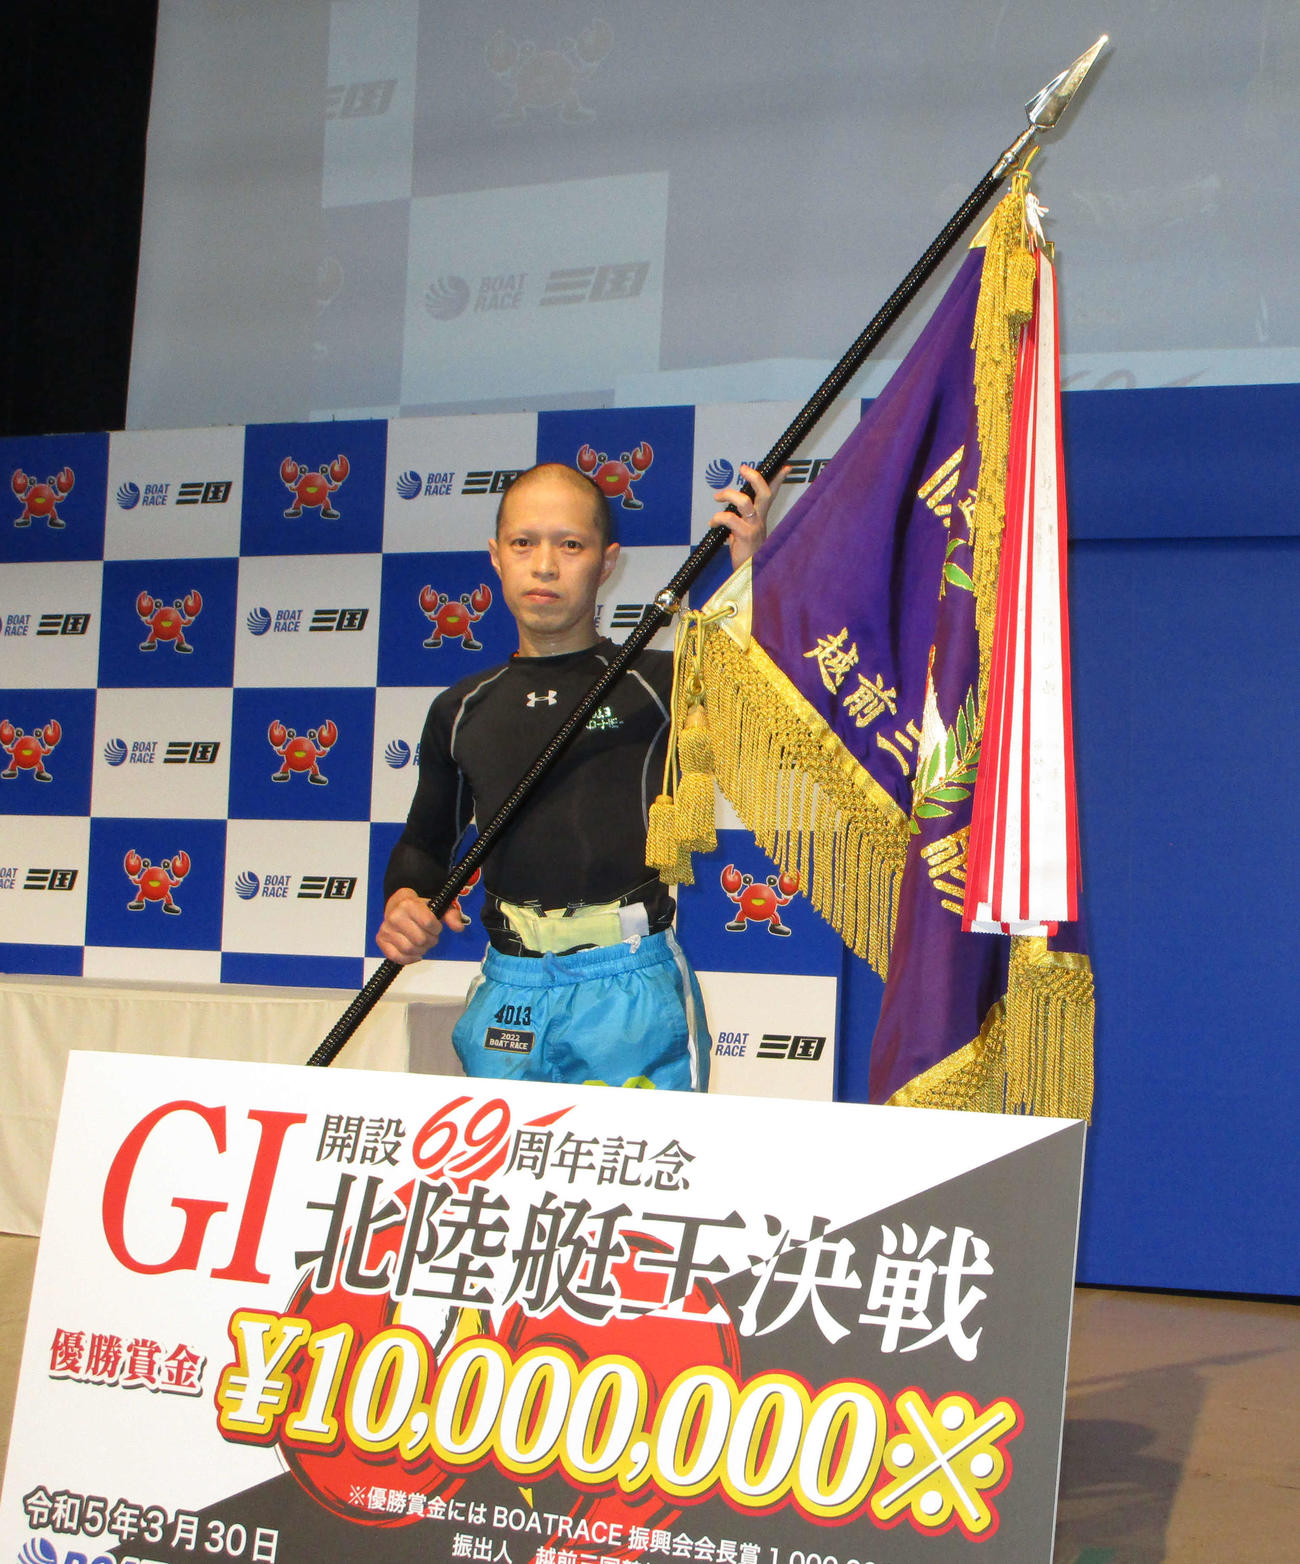 G1北陸艇王決戦で優勝し、表彰式で優勝機を掲げる中島孝平